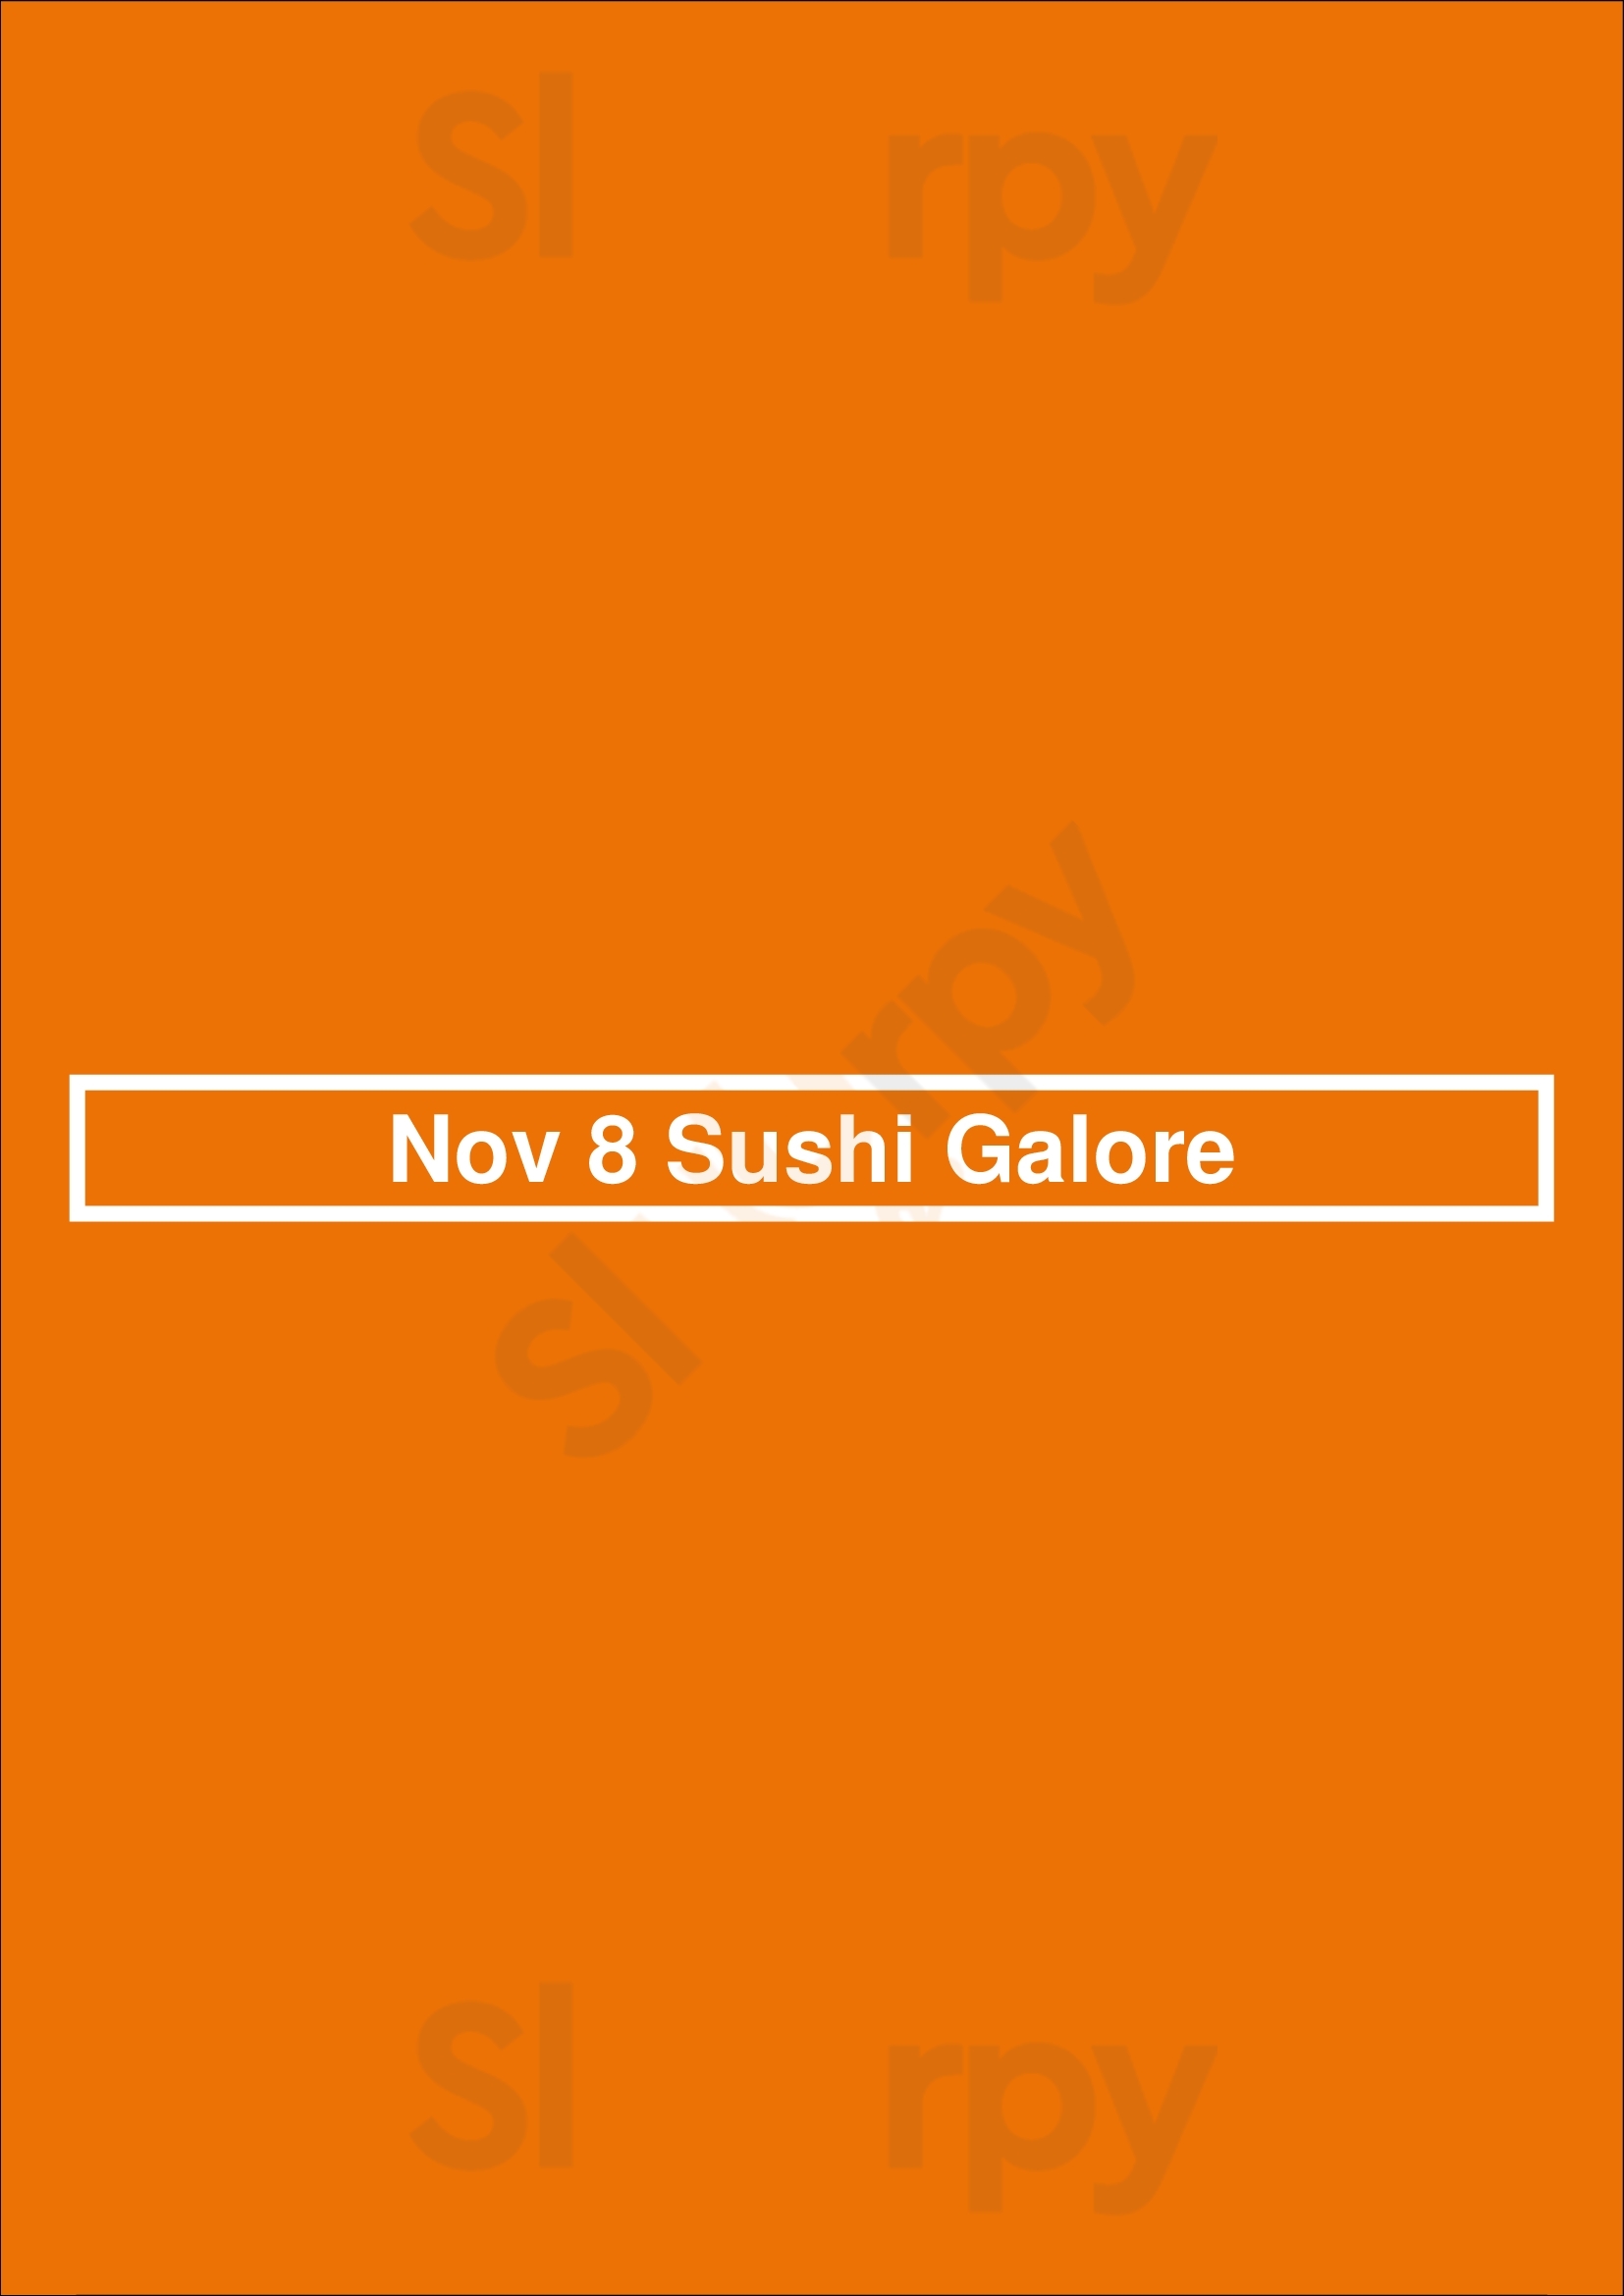 Nov 8 Sushi Galore London Menu - 1